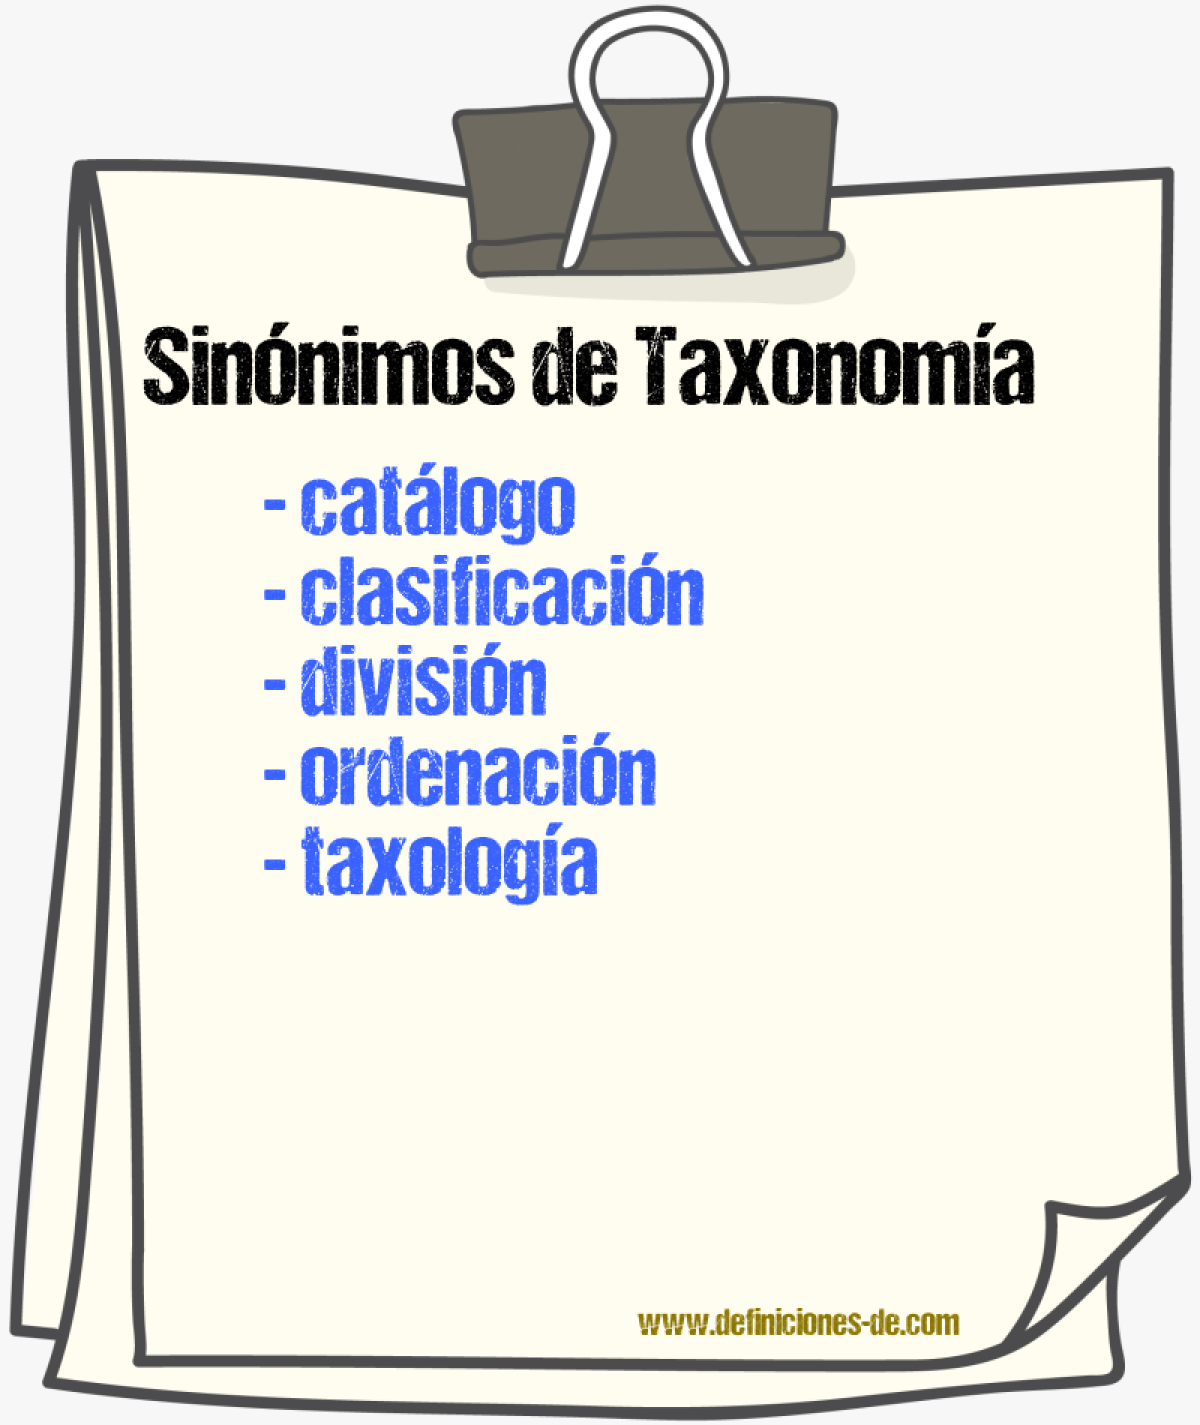 Sinnimos de taxonoma